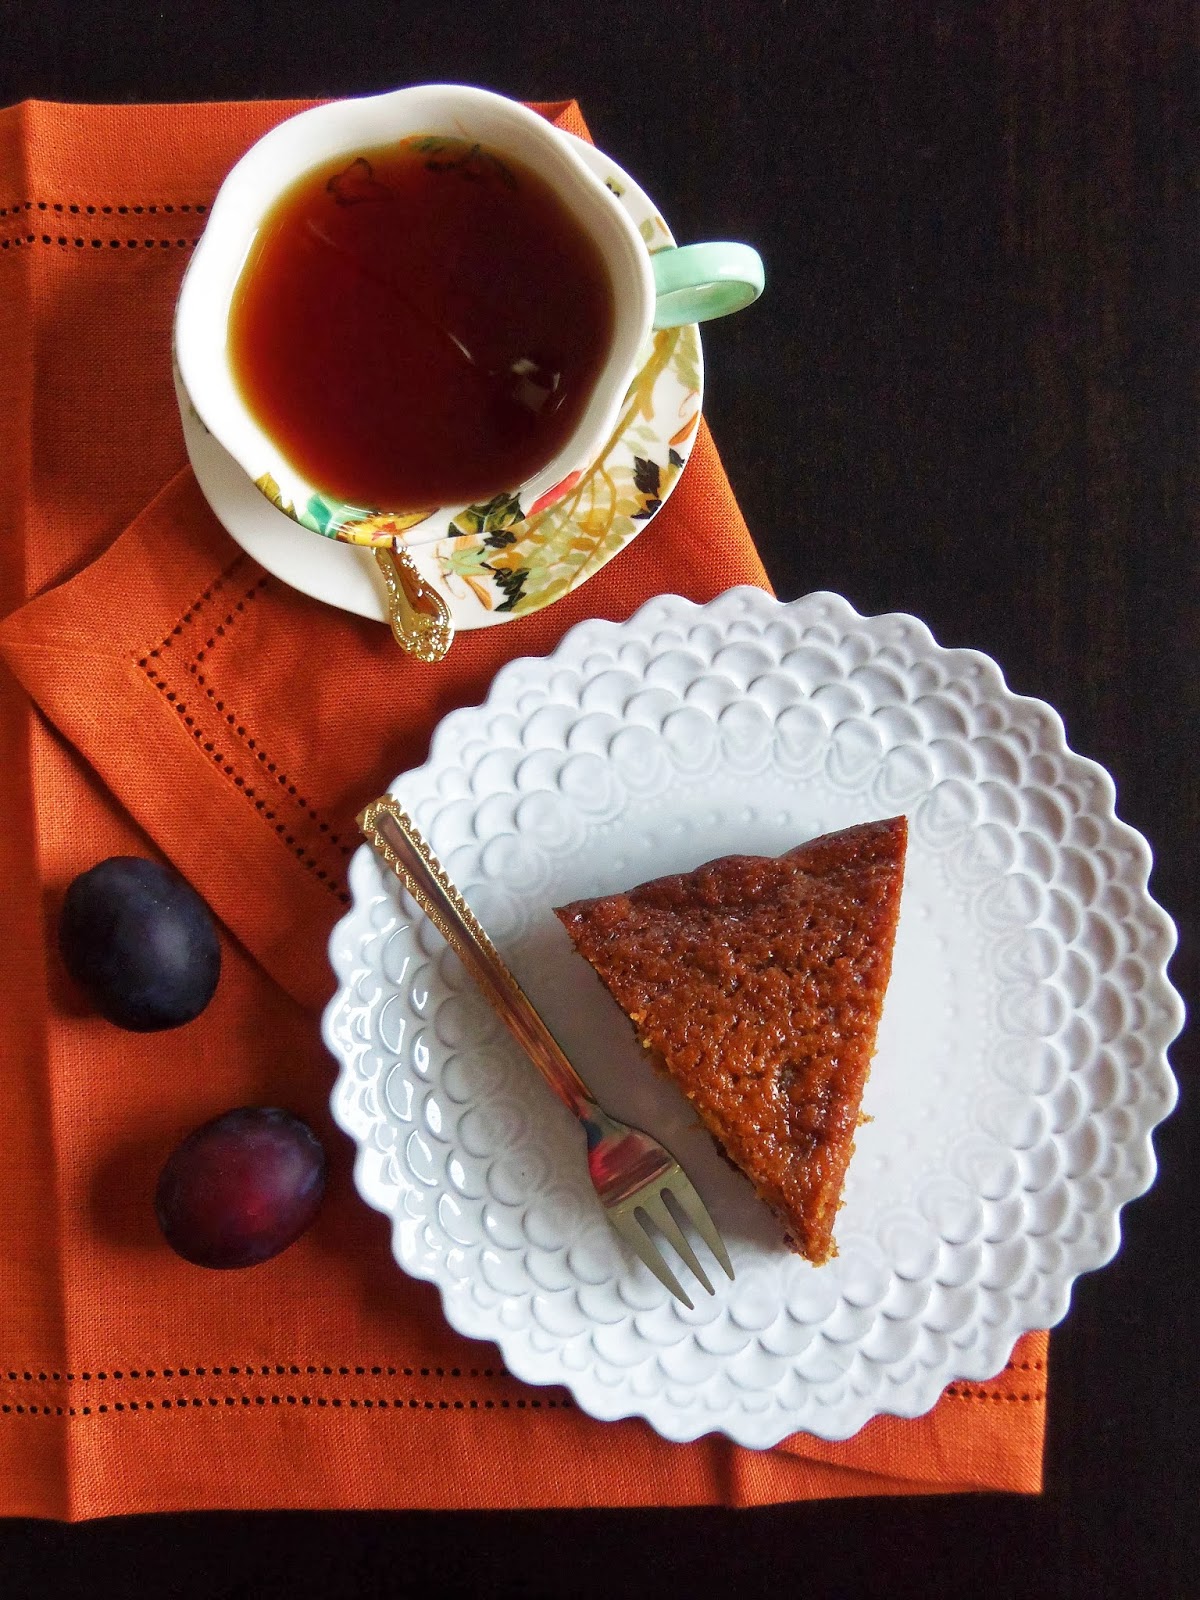 Simply Romanesco: Honey and cinnamon plum cake for turning two!